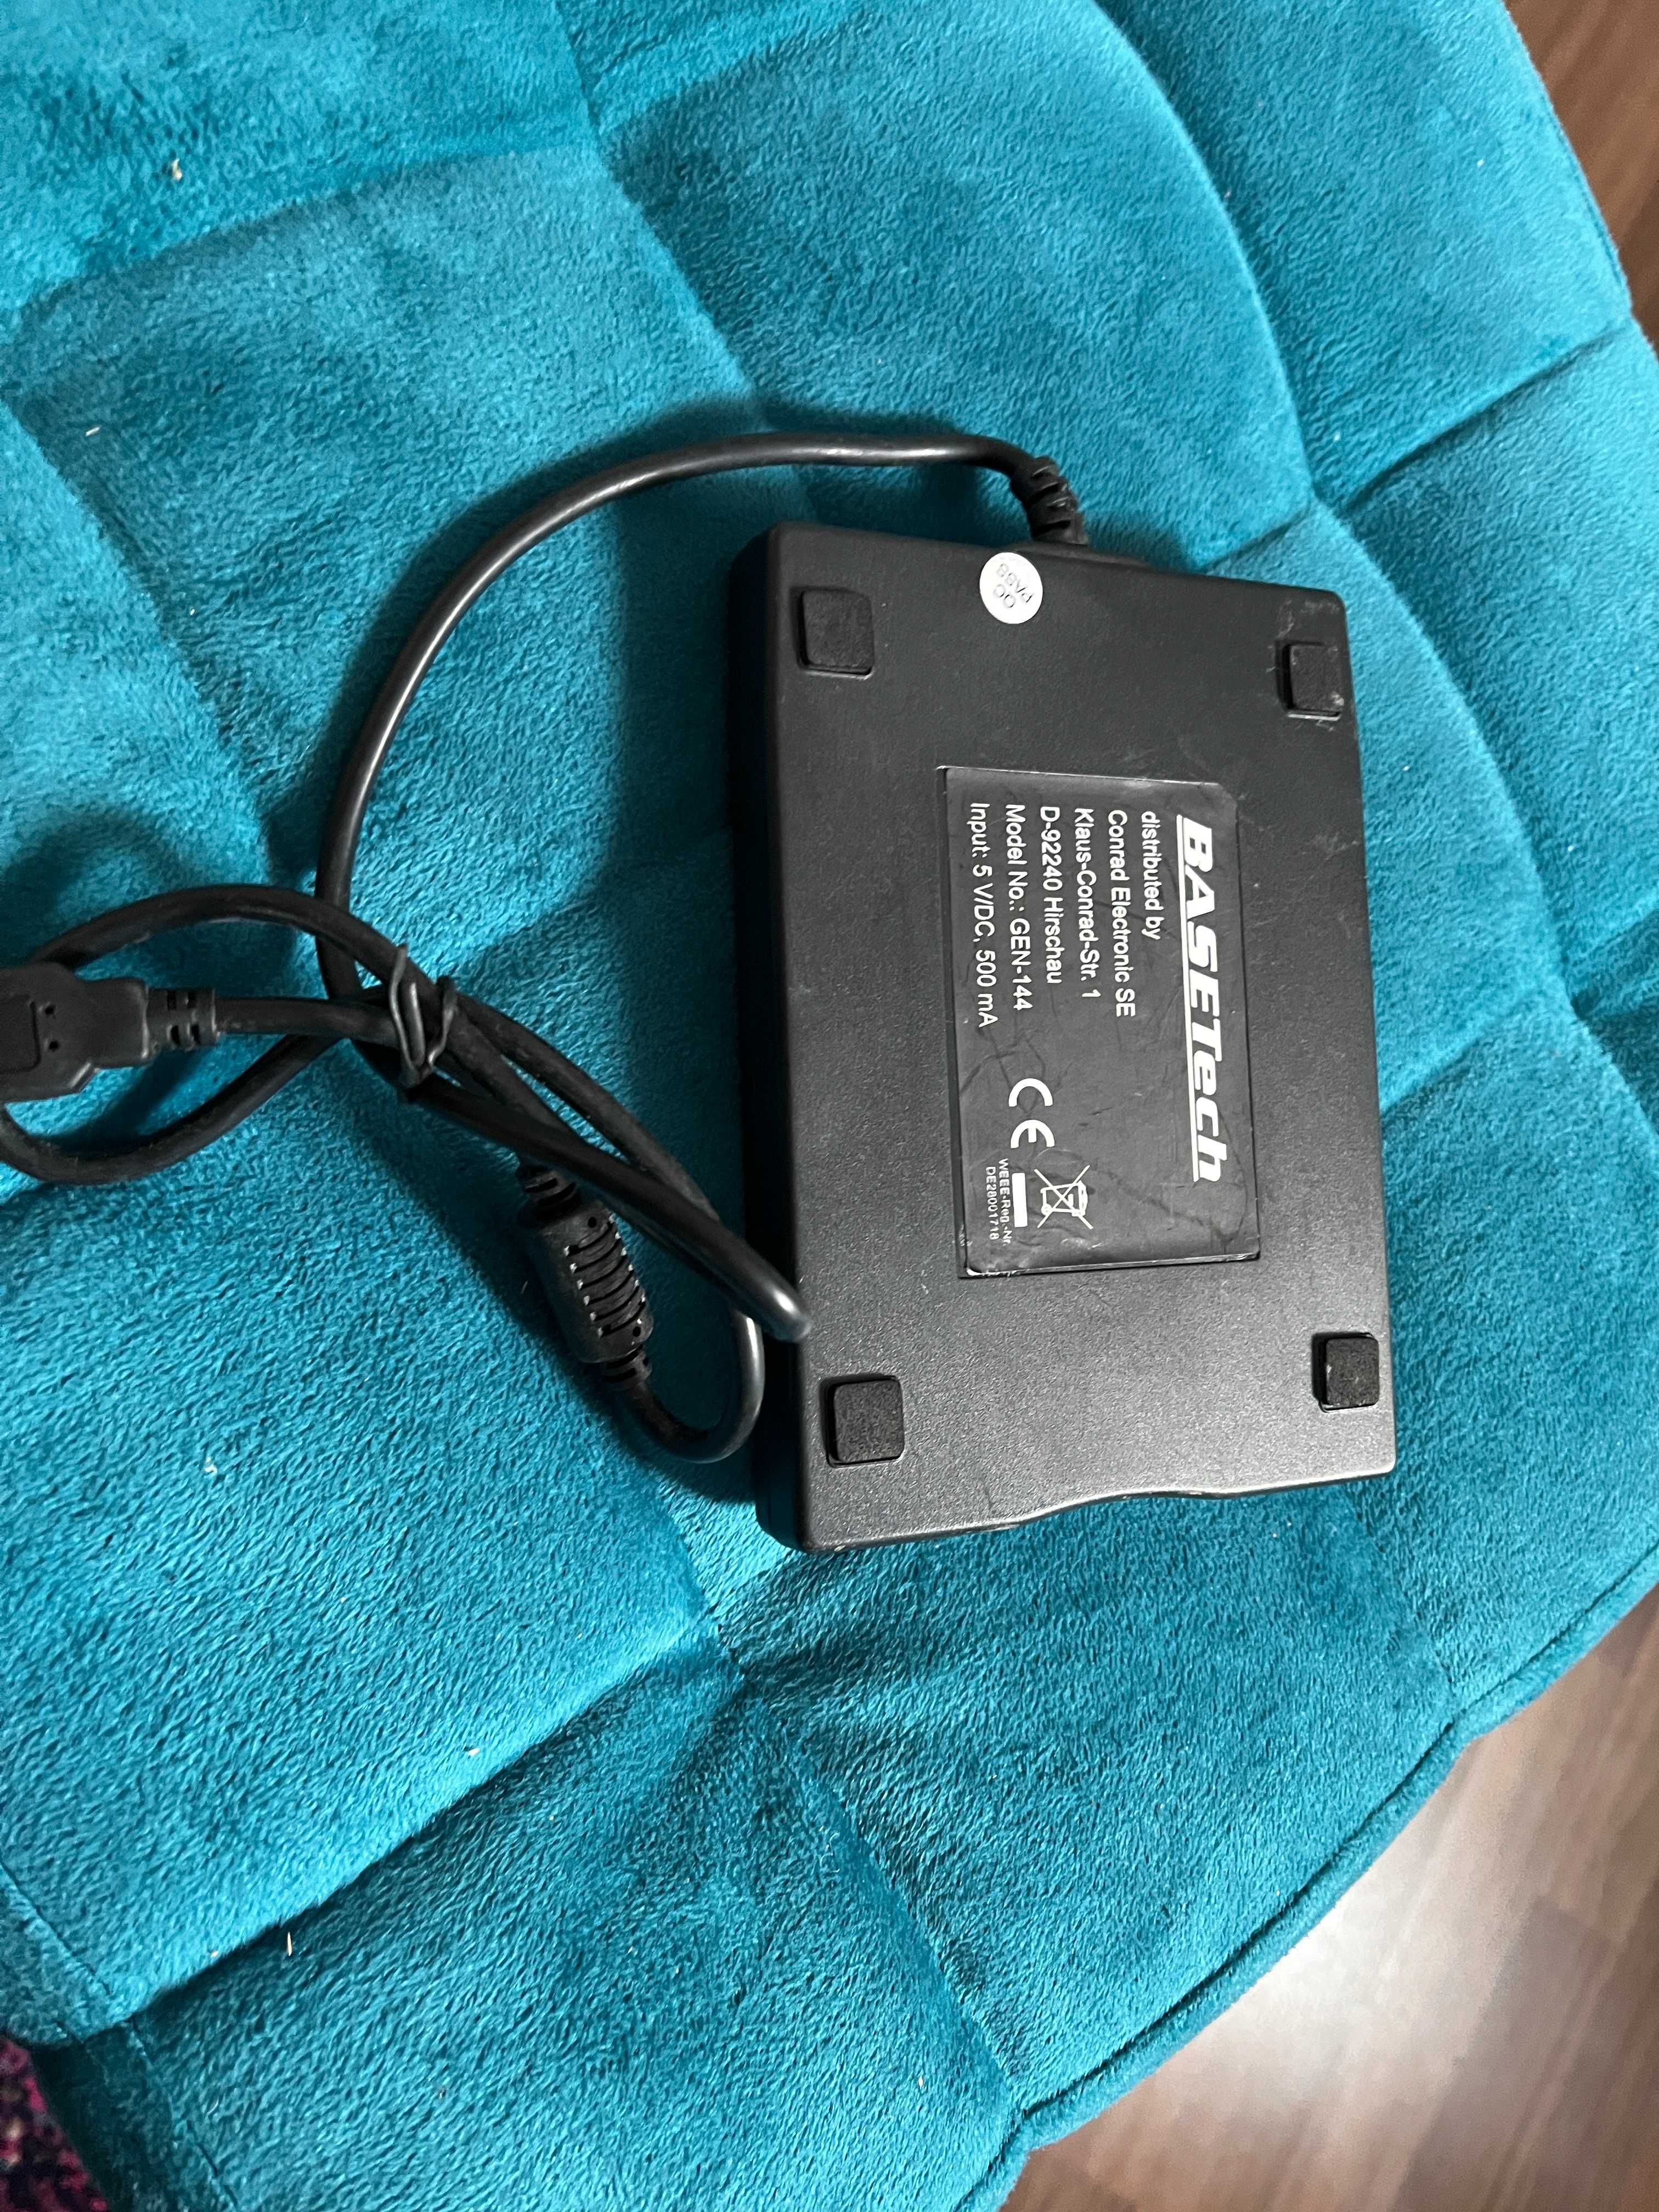 Unitate disketa portabila usb -1,44 MB (floppy disk drive)